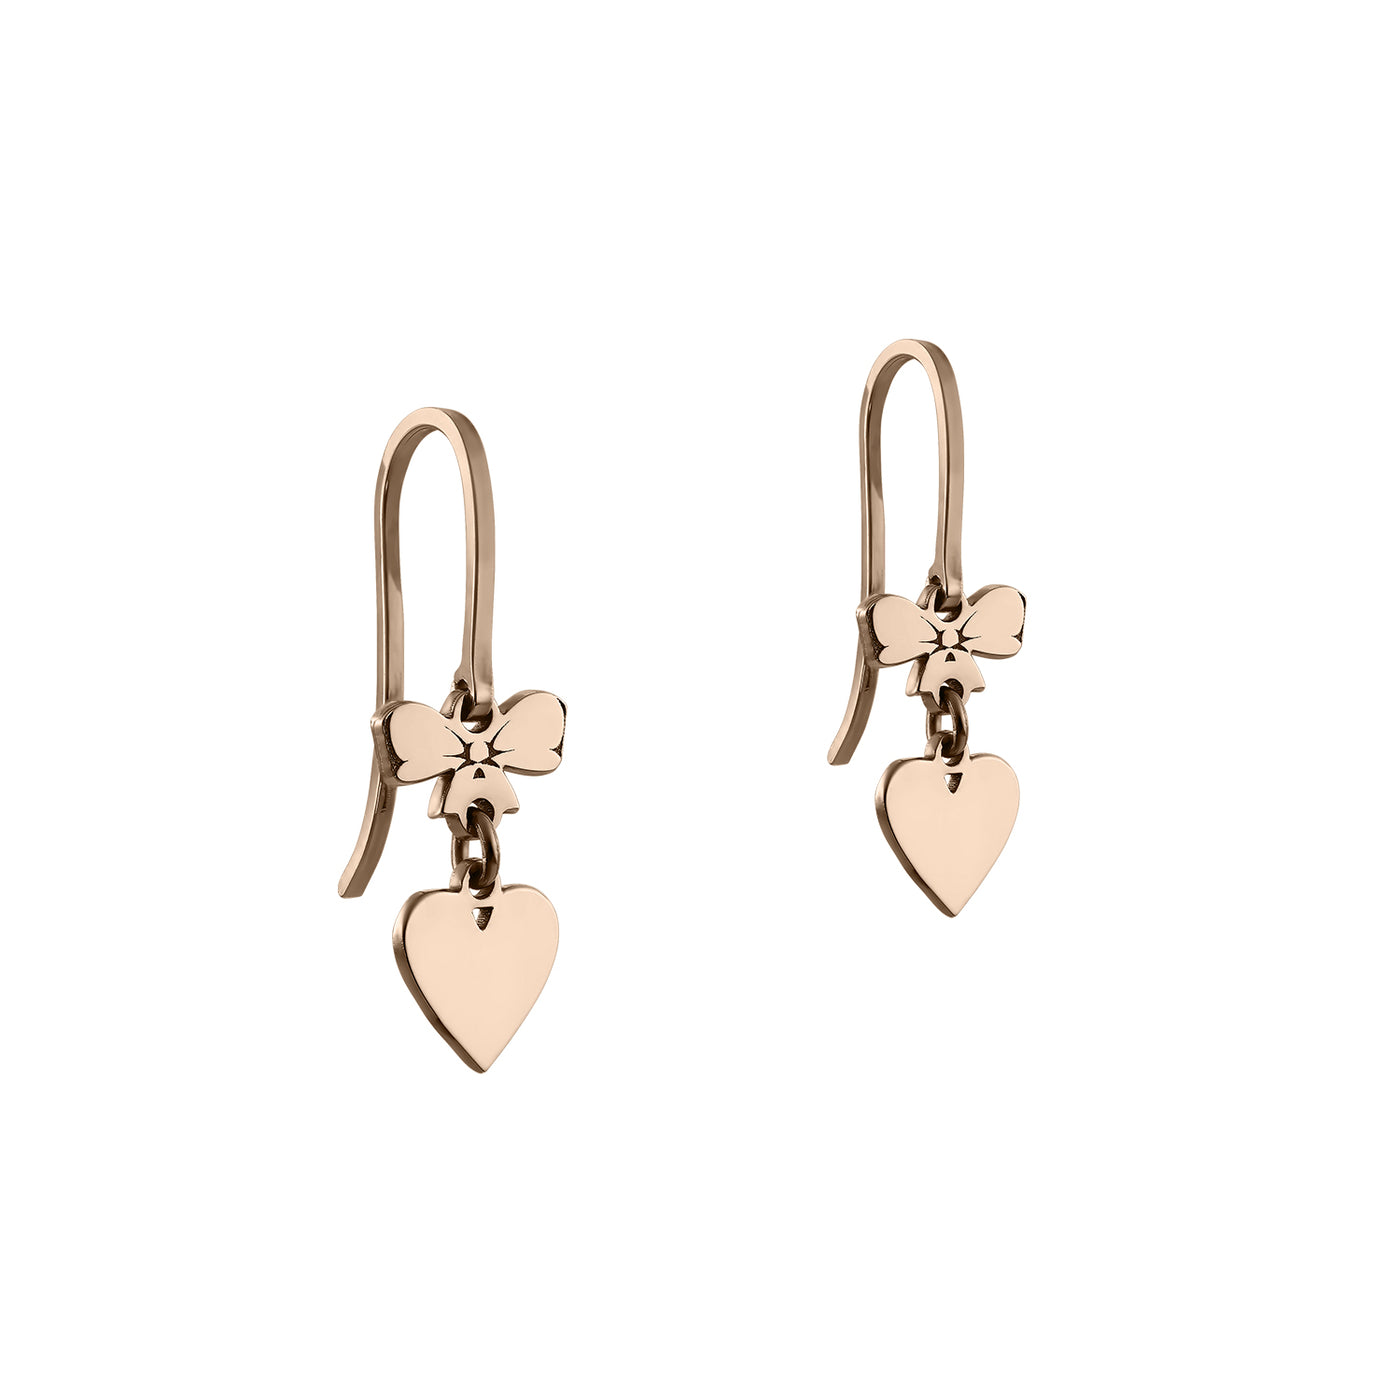 Ear Wire Earrings Heart with a Bow, in rose gold - zeaetsia